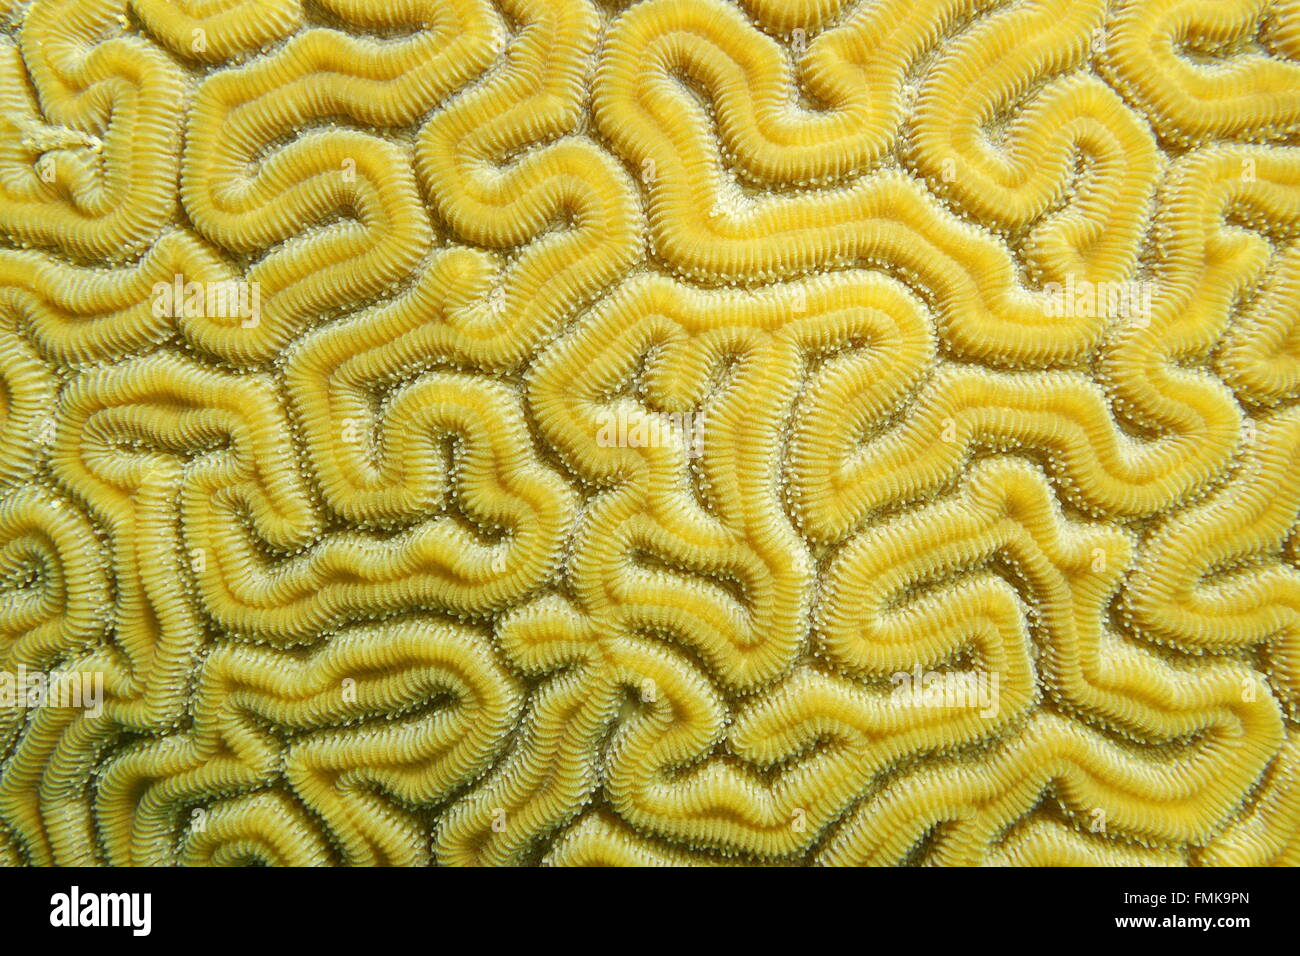 Maze of grooved brain coral, Diploria labyrinthiformis, close-up, Caribbean sea Stock Photo